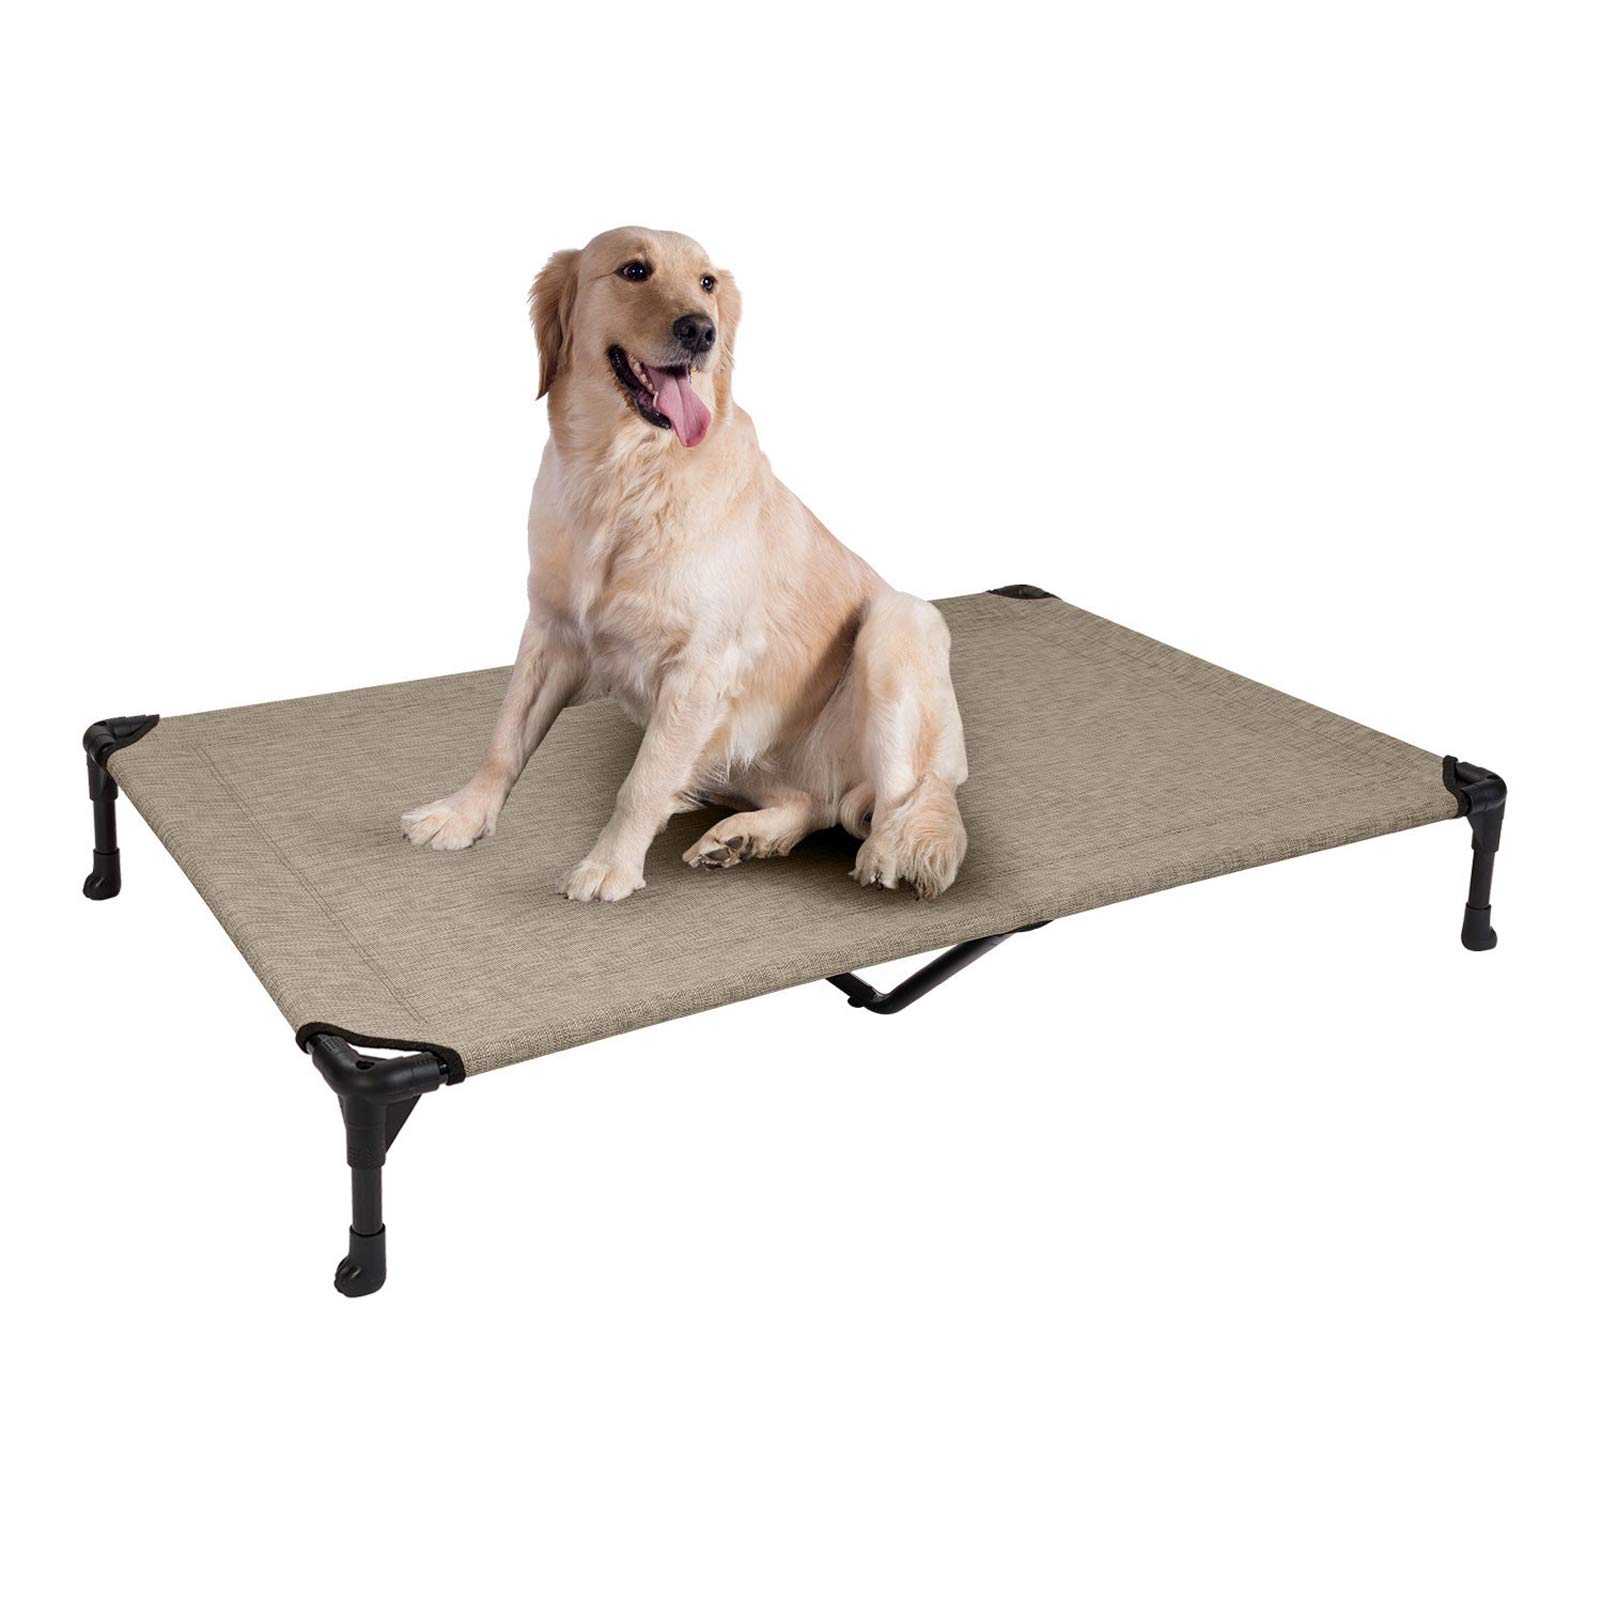 Veehoo Cooling Elevated Dog Bed